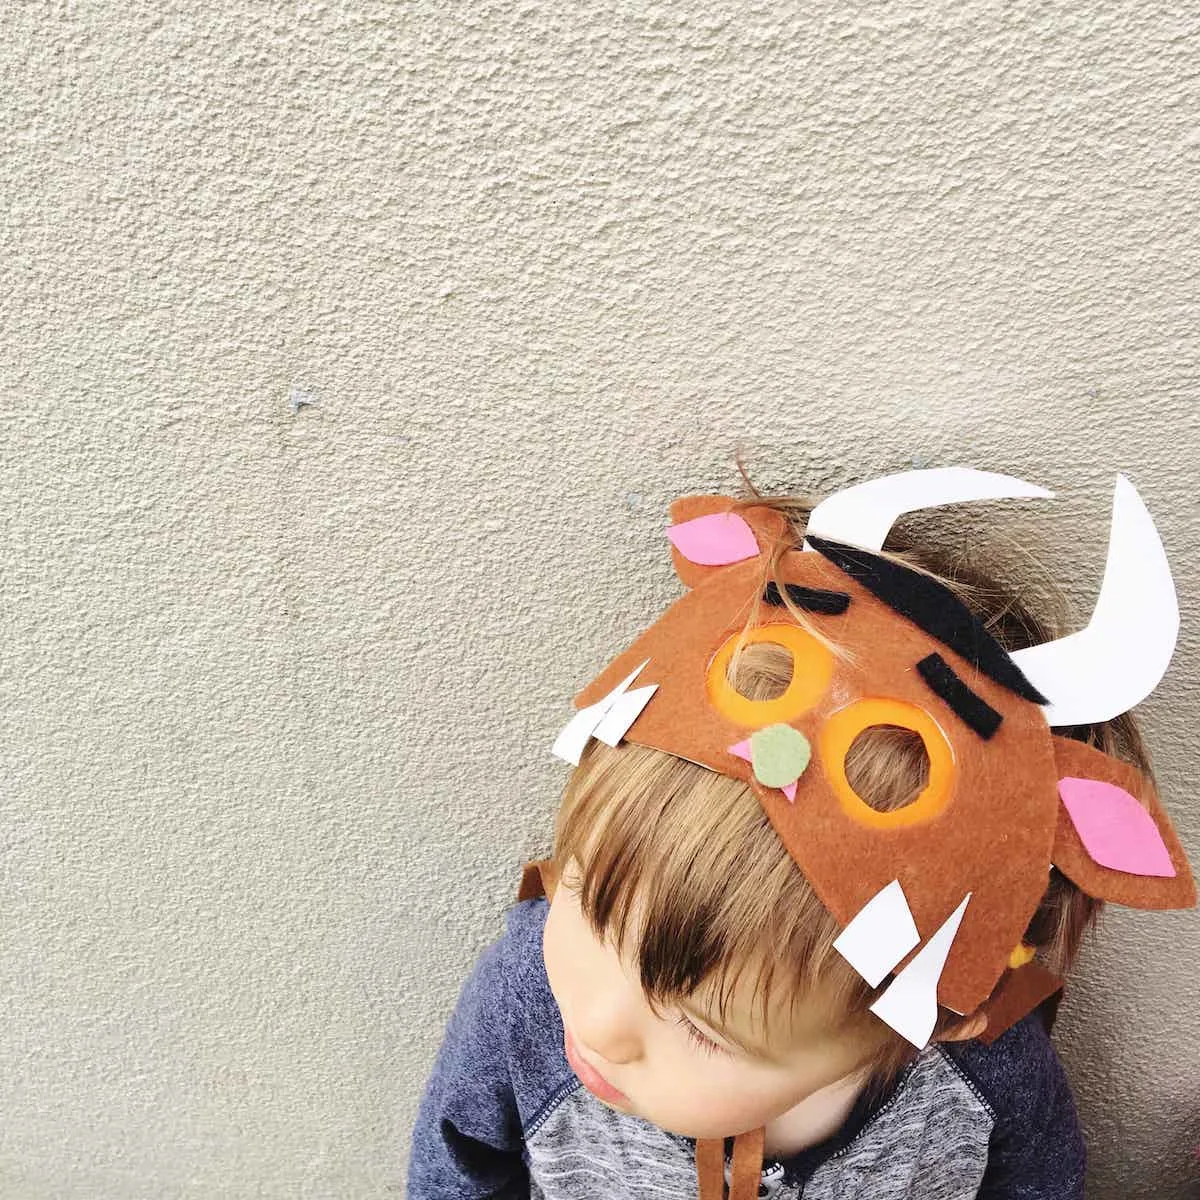 Gruffalo costume - homemade gruffalo mask